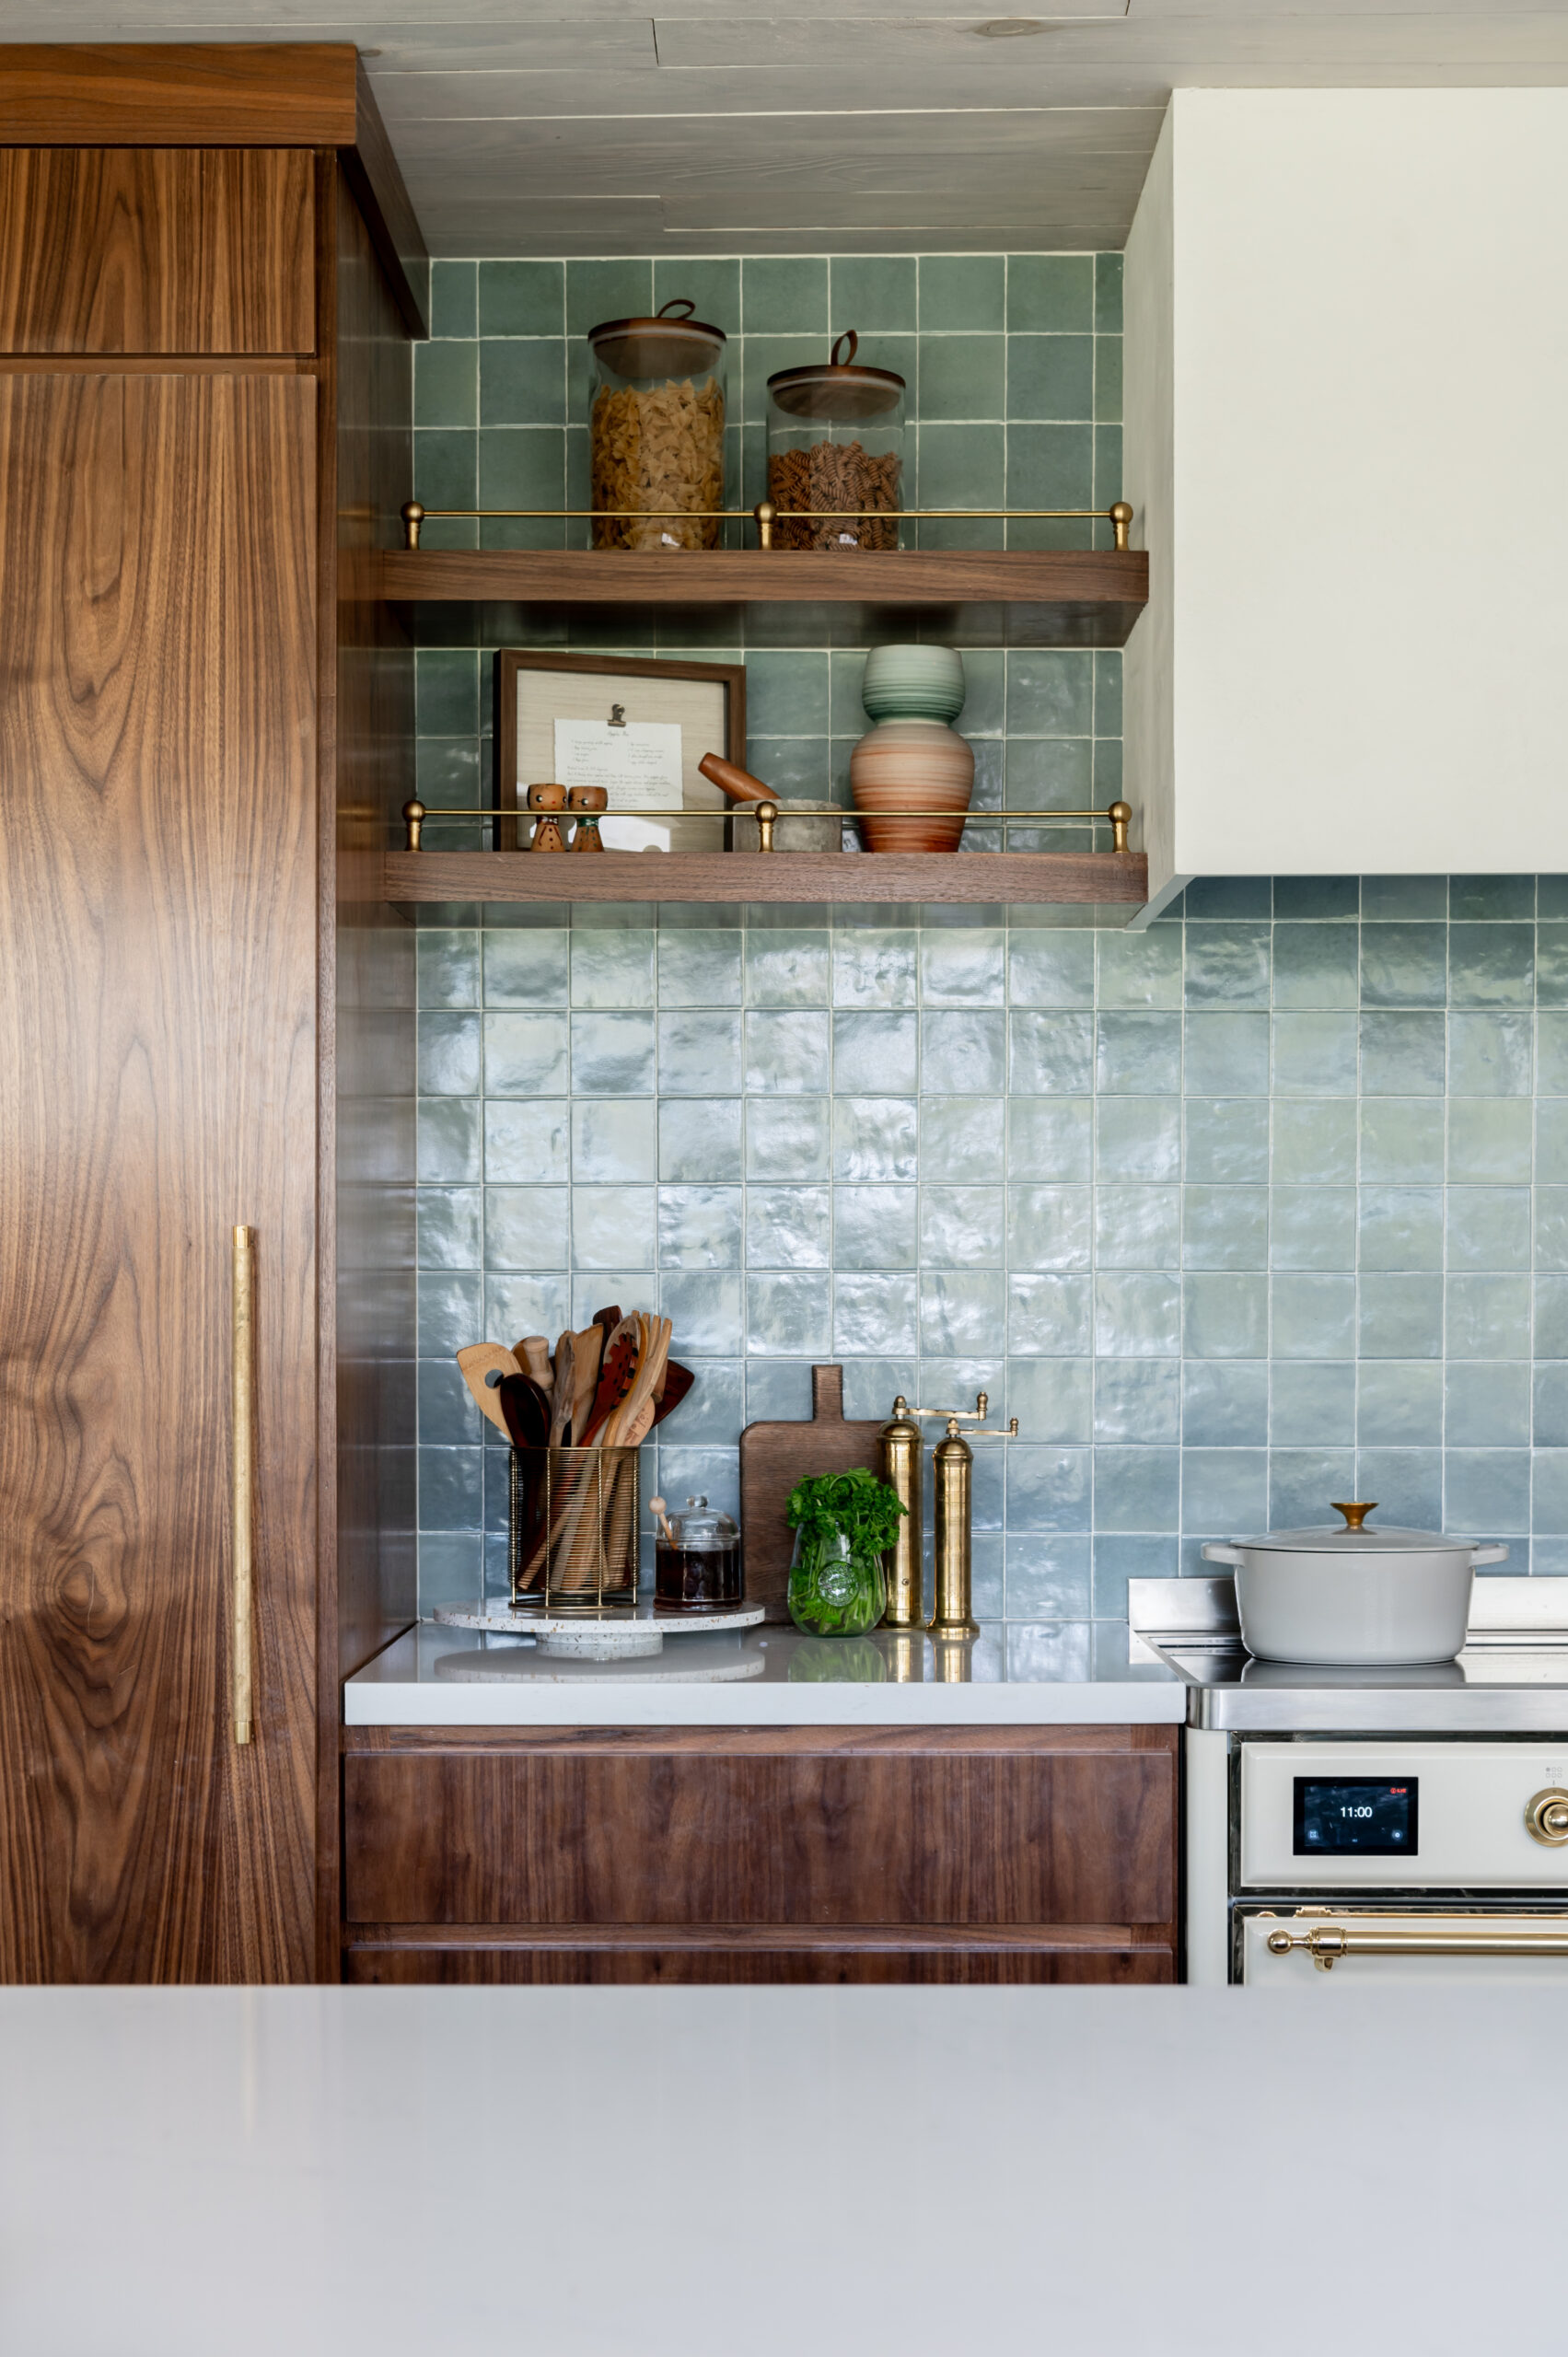 Midcentury kitchen interior design, with tile backsplash and wood cabinets